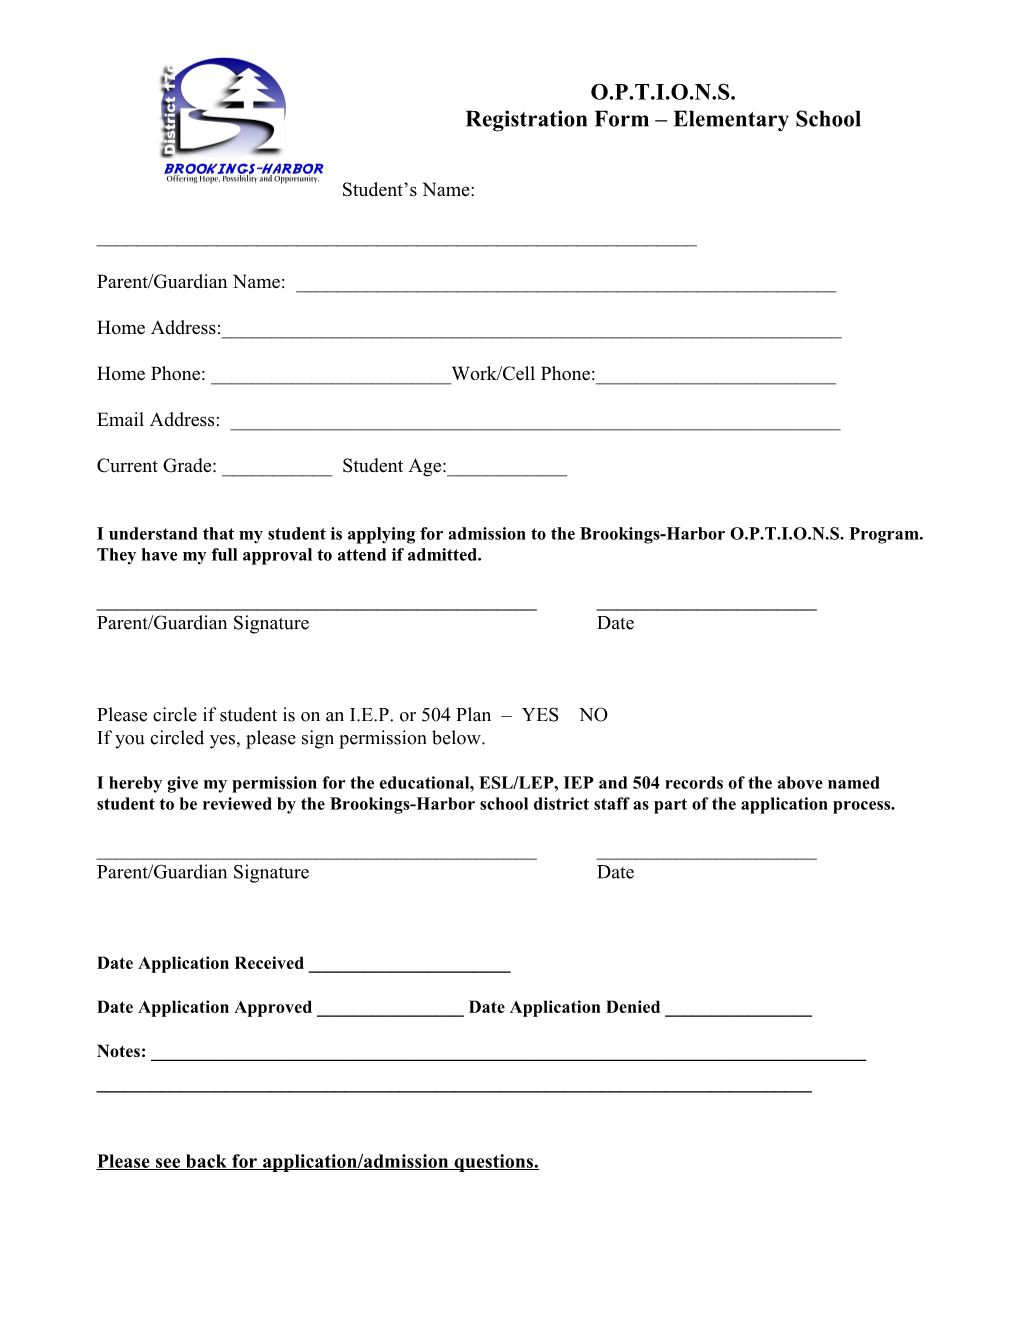 Registration Form Elementary School